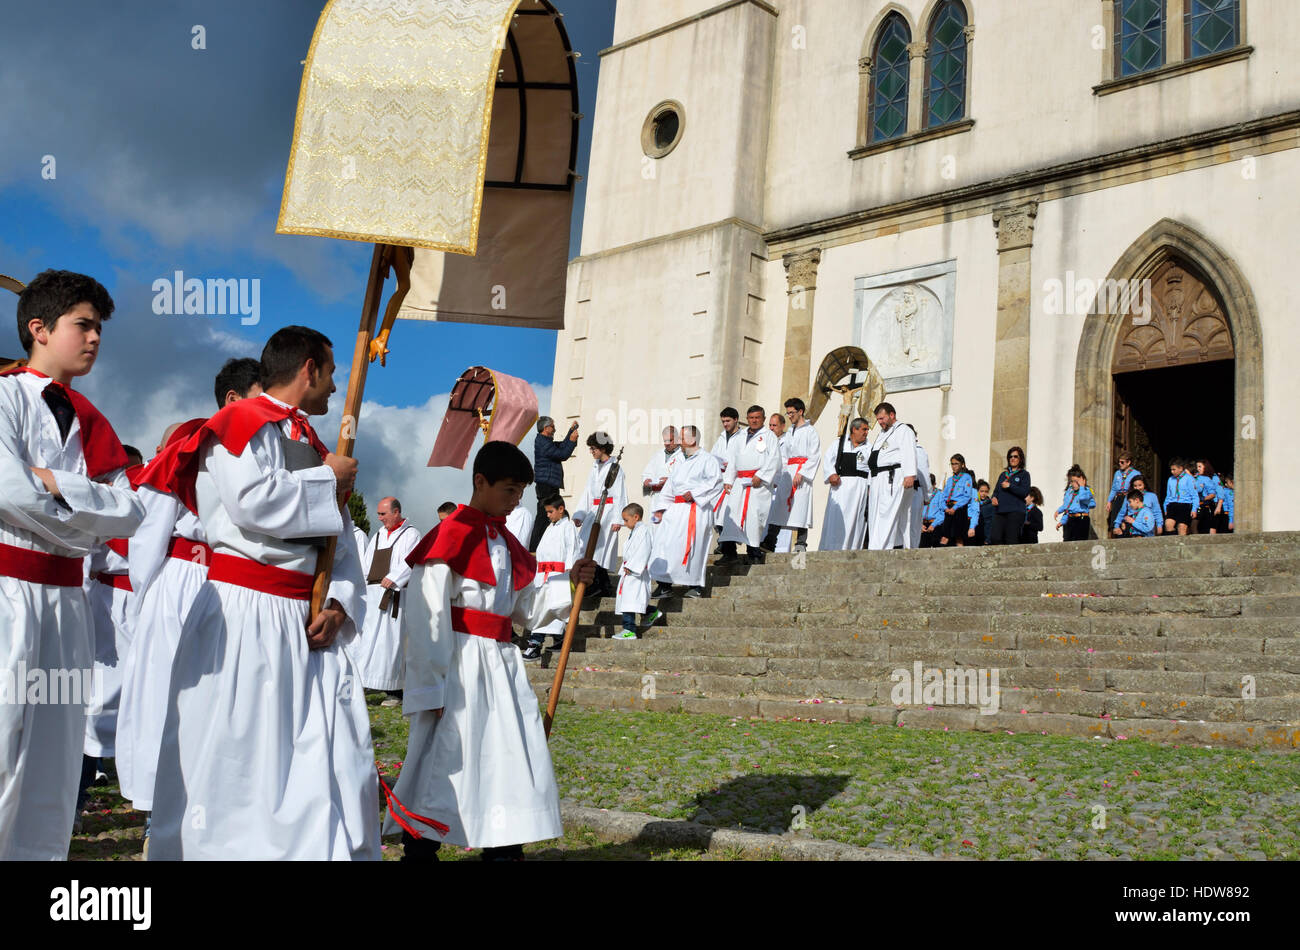 Procession religieuse ; Seneghe, province d'Oristano, Sardaigne, Italie Banque D'Images